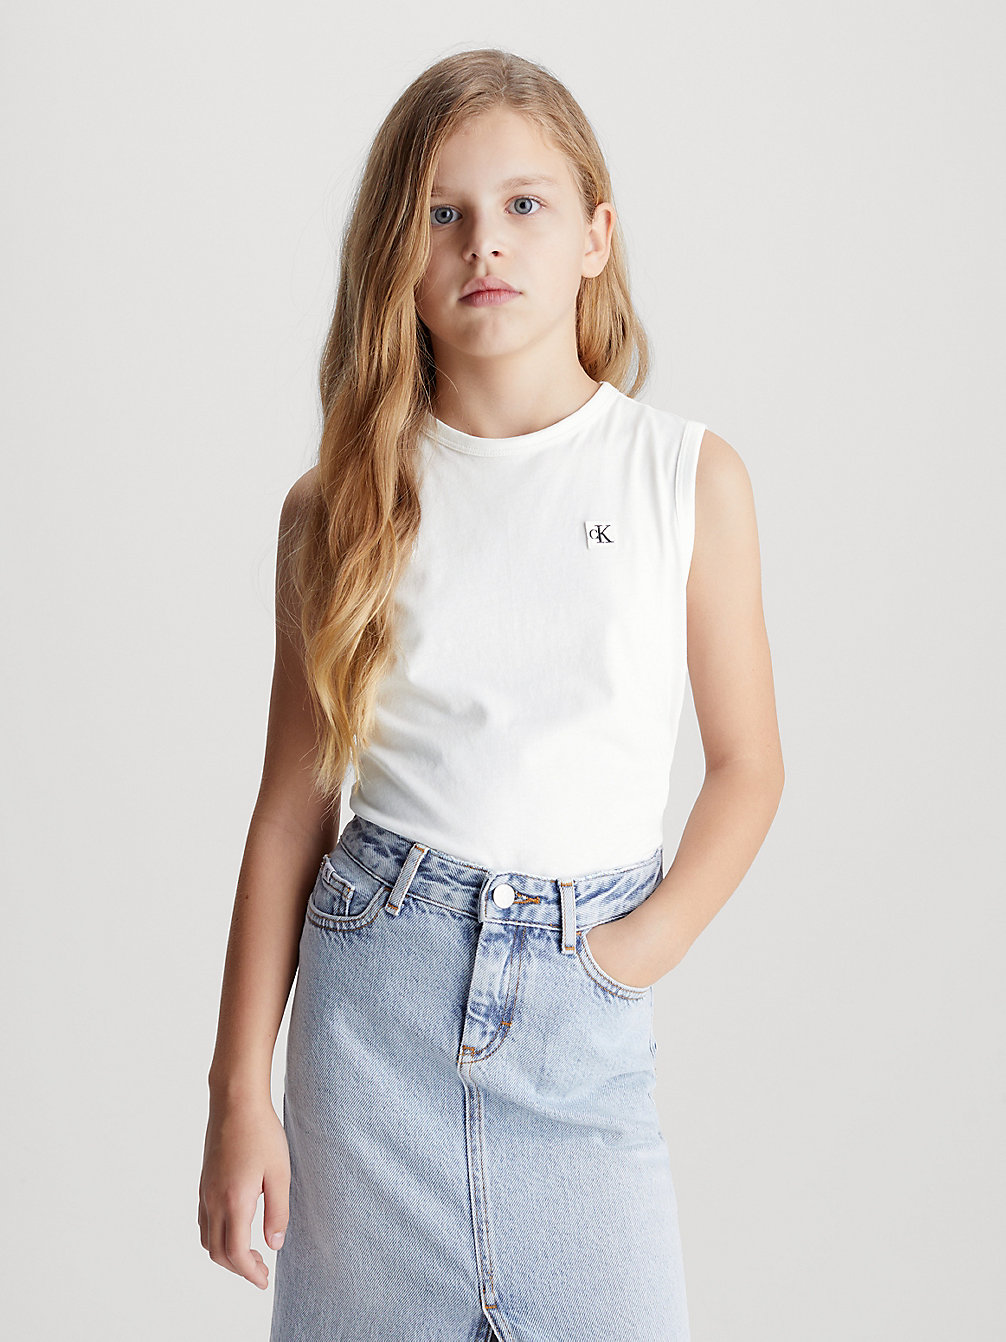 Camiseta De Tirantes Infantil Con Monograma > BRIGHT WHITE > undefined Unisex infantil > Calvin Klein